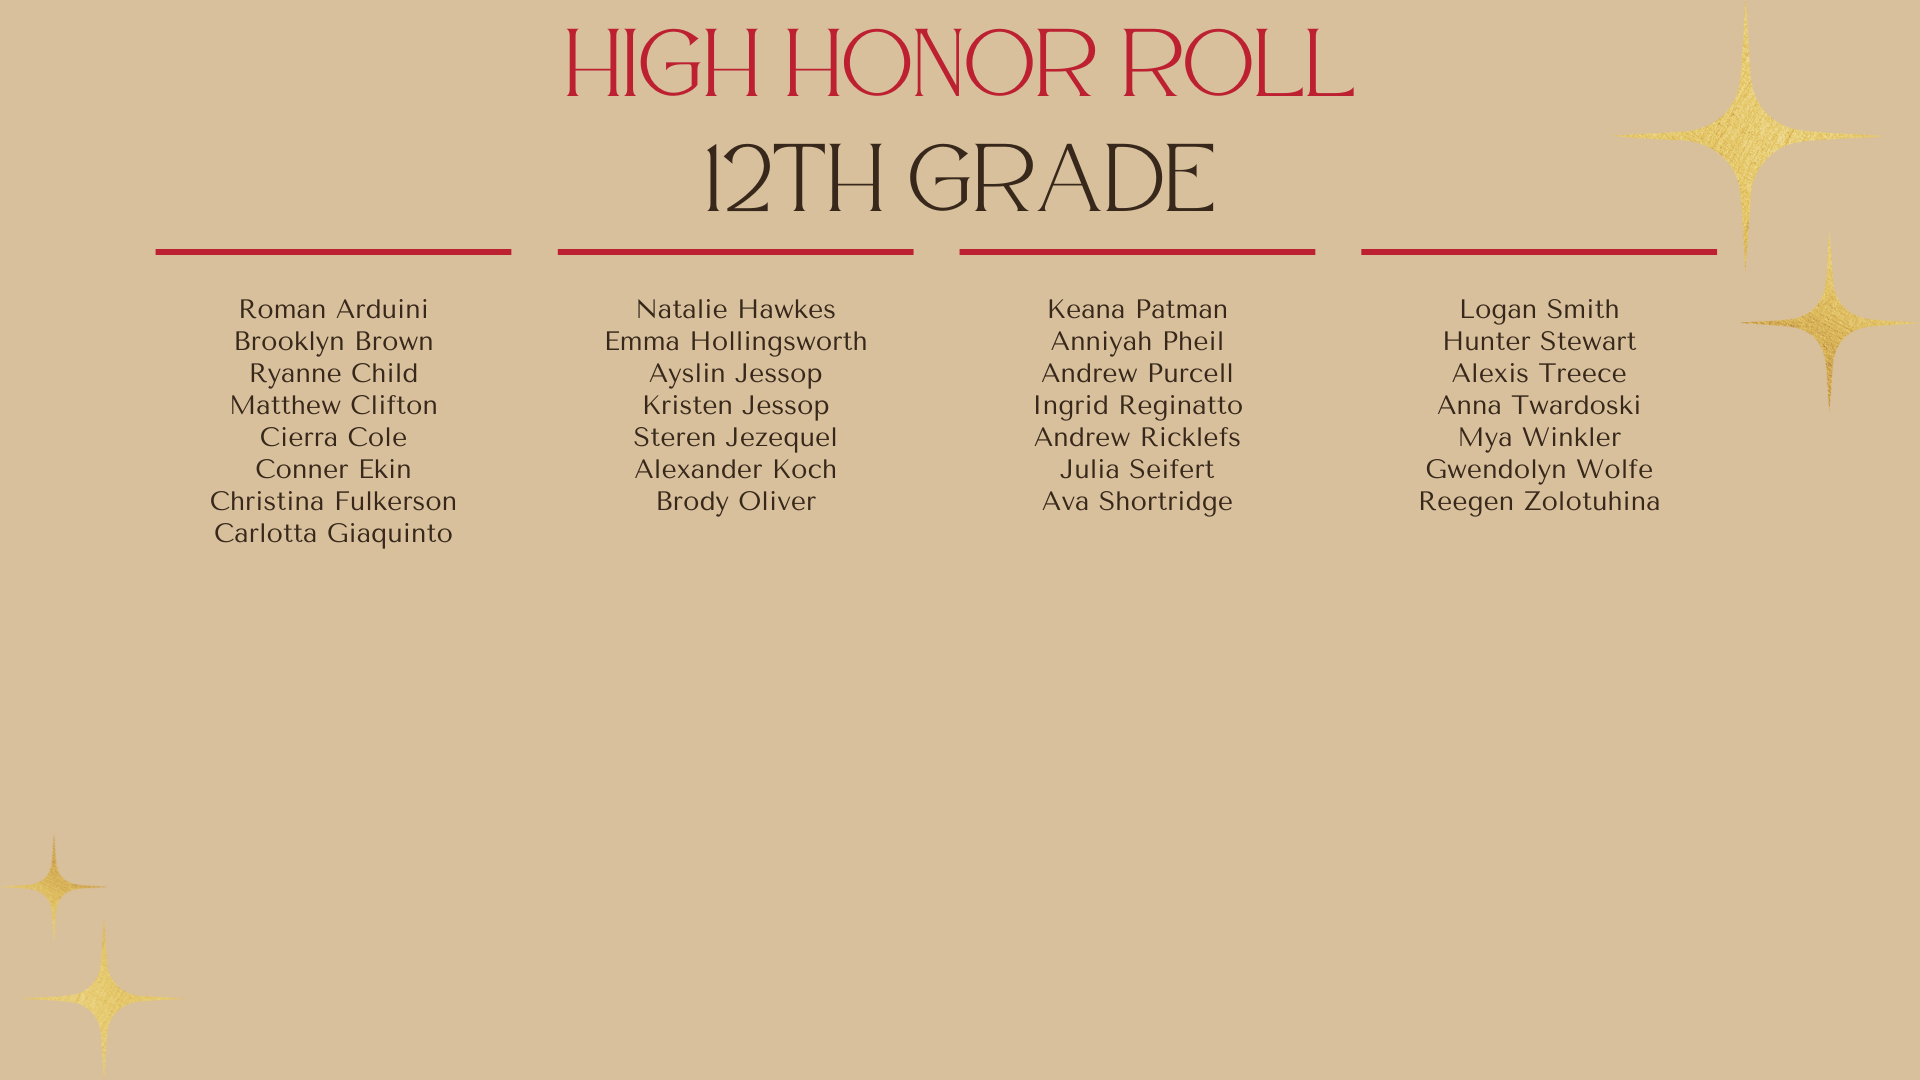 High Honor Roll 12th grade